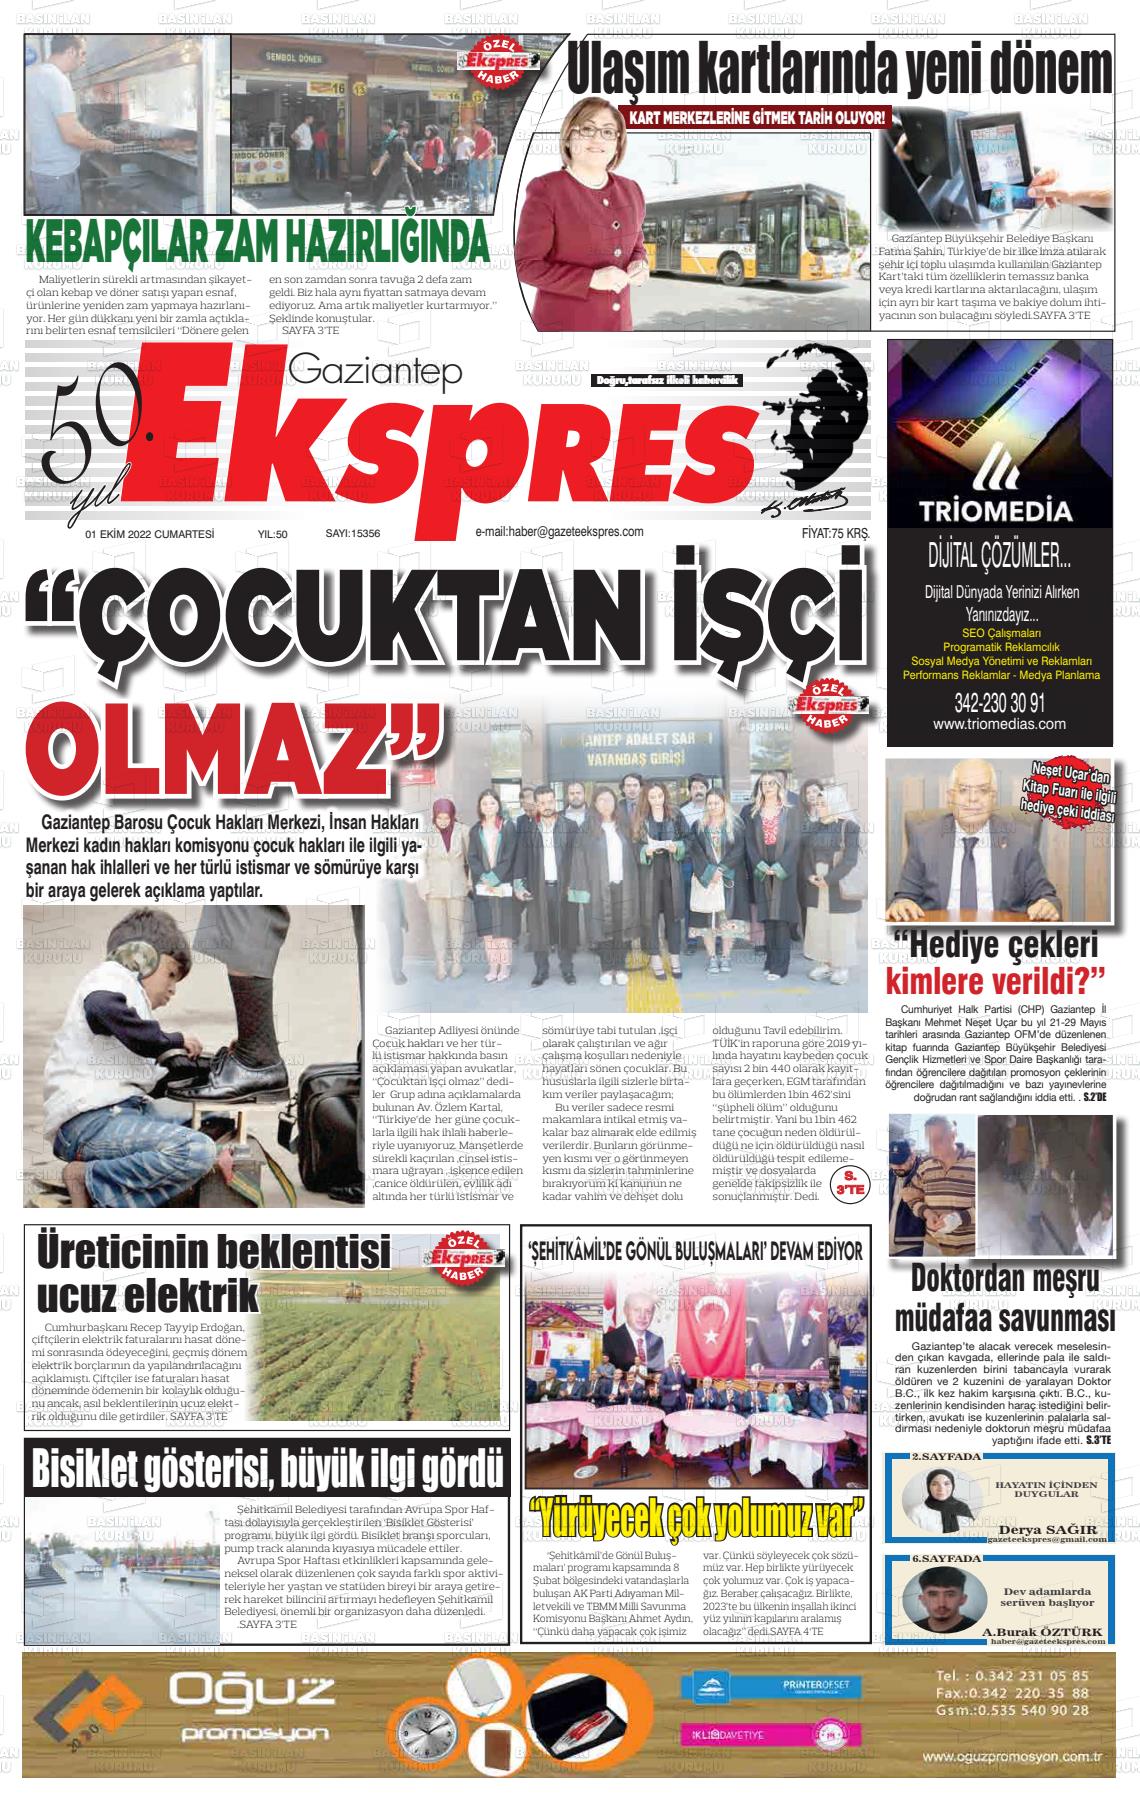 Ekim Tarihli Gaziantep Ekspres Gazete Man Etleri